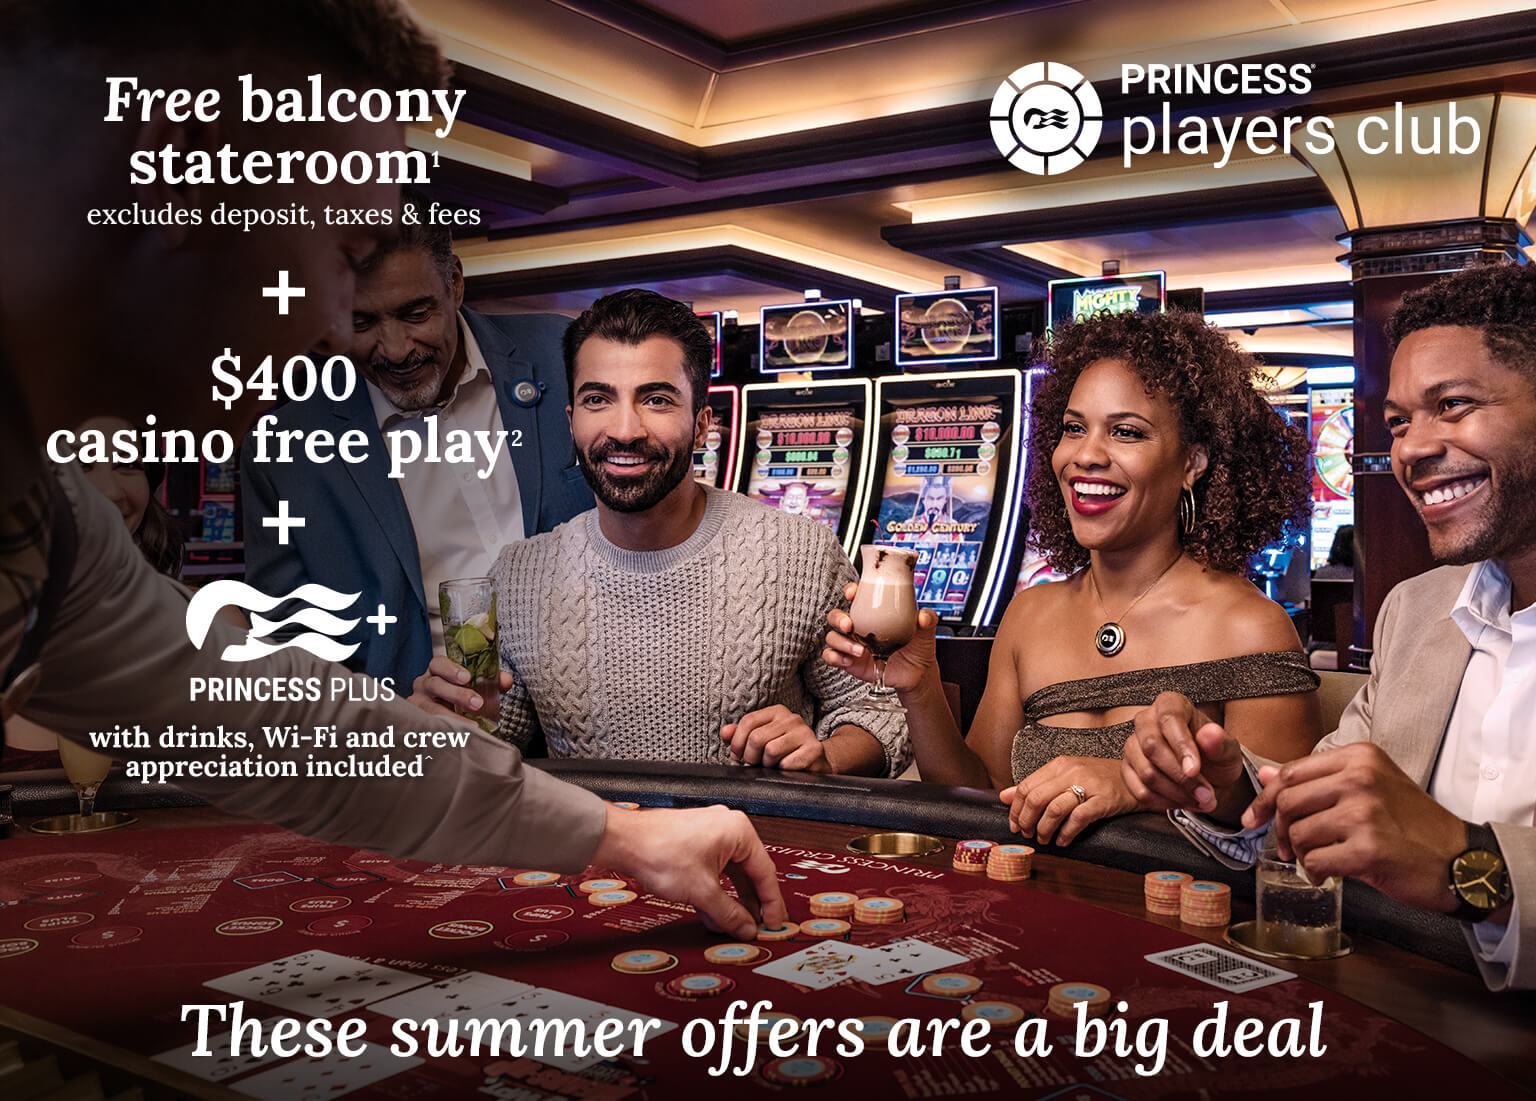 free balcony stateroom + $400 casino free play + Princess Plus. Click here to book.